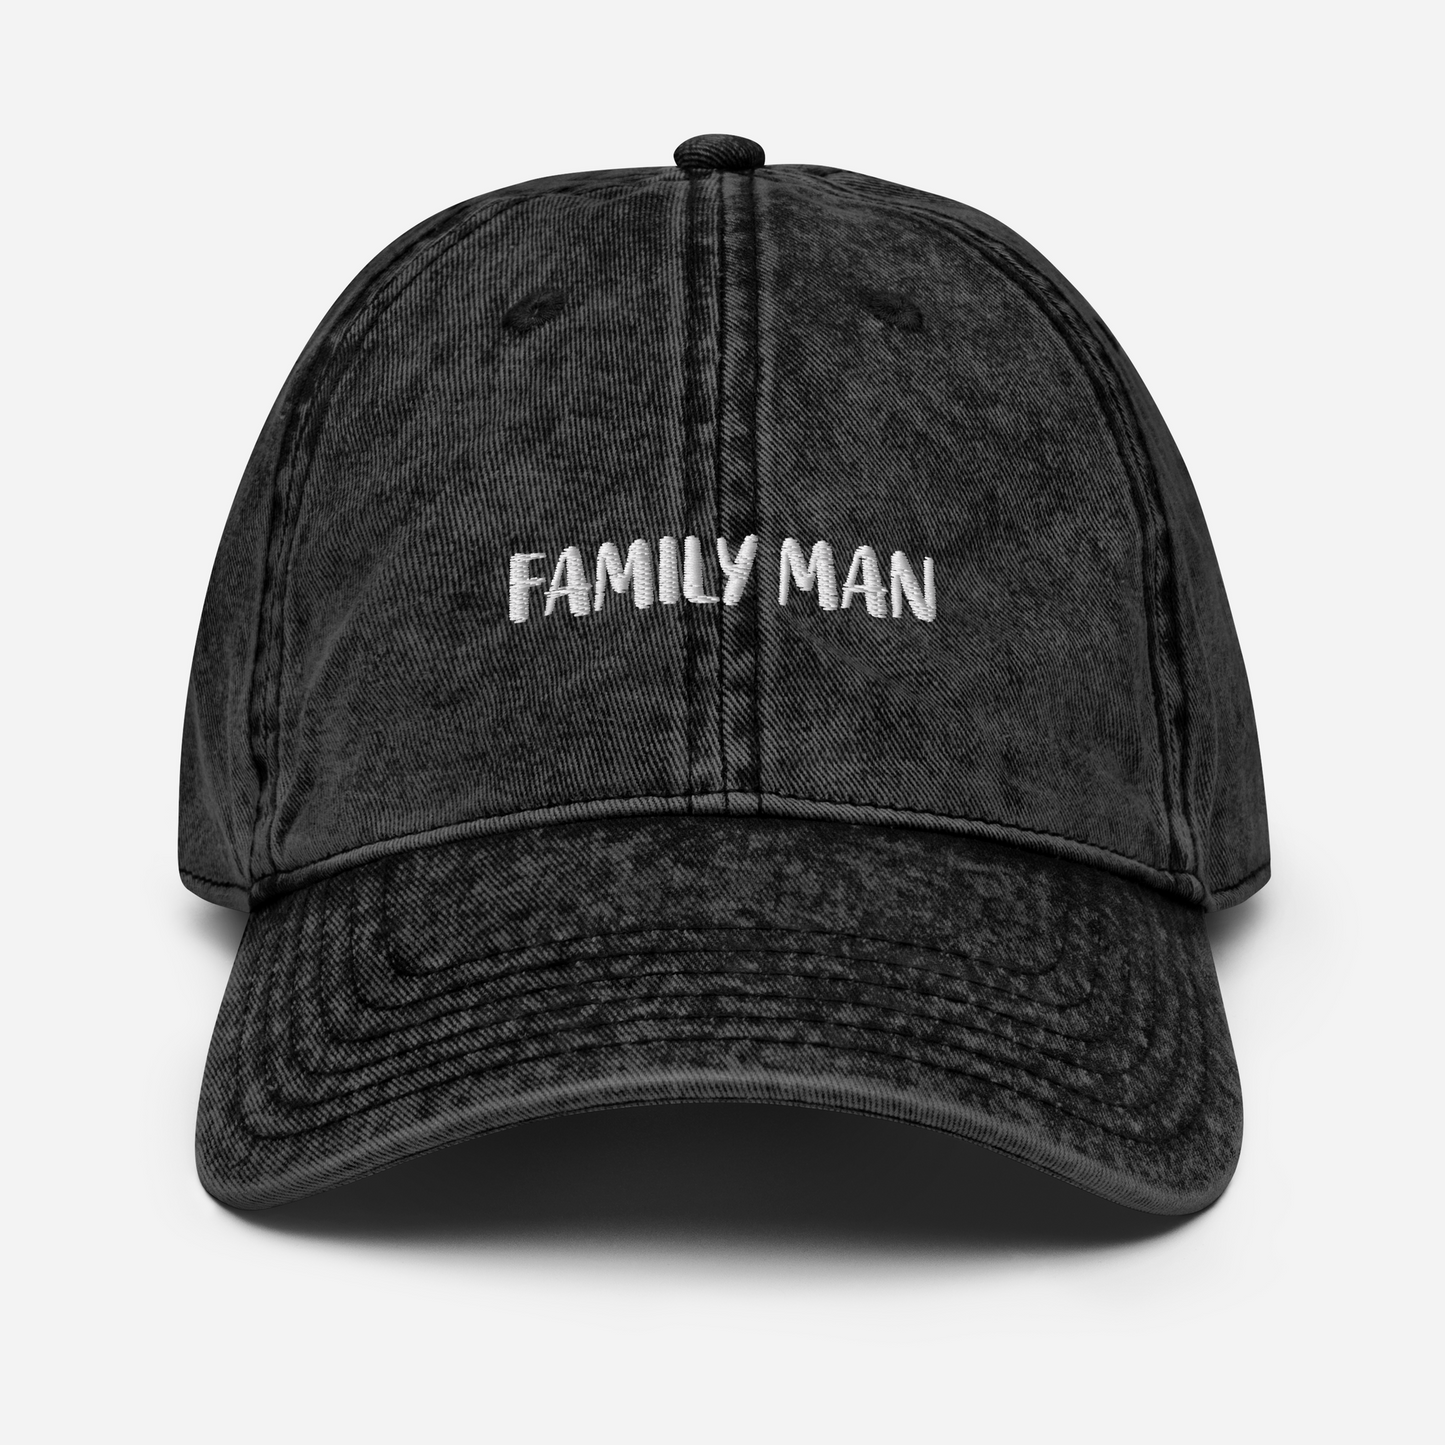 Family Man Vintage Cotton Twill Cap